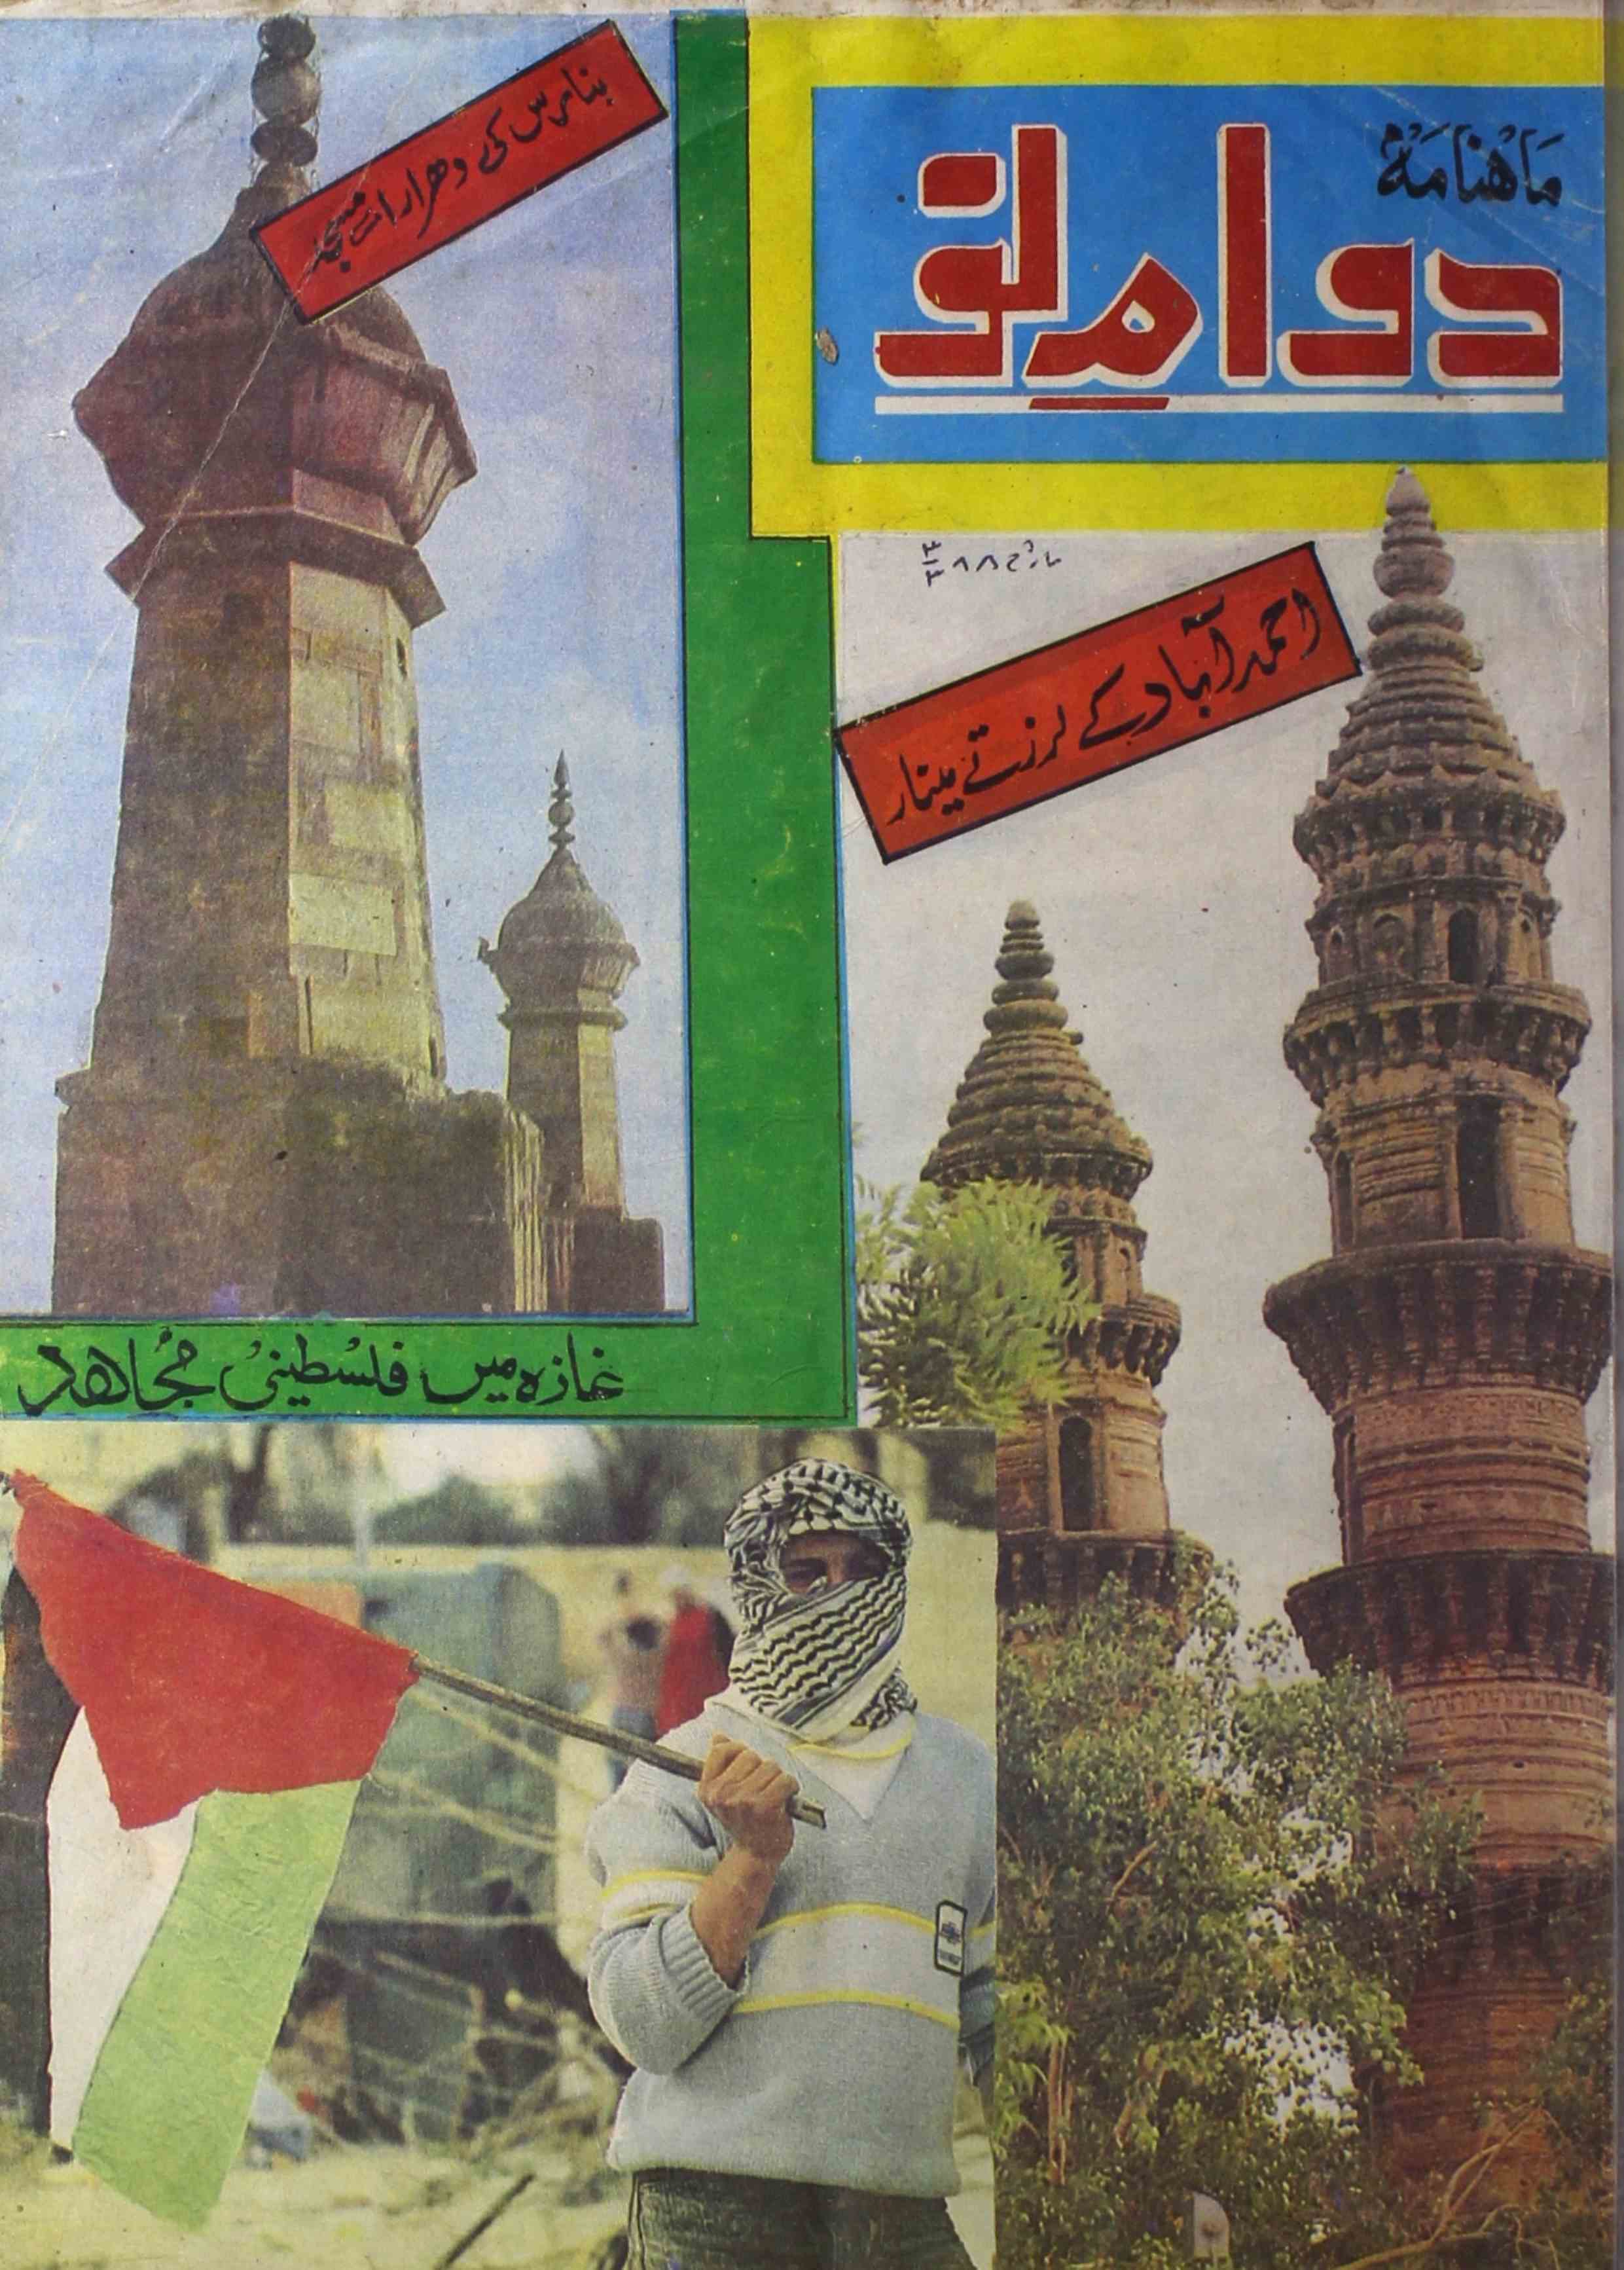 Dawam-e-nau-shumara-number-003-syed-abdul-bari-magazines